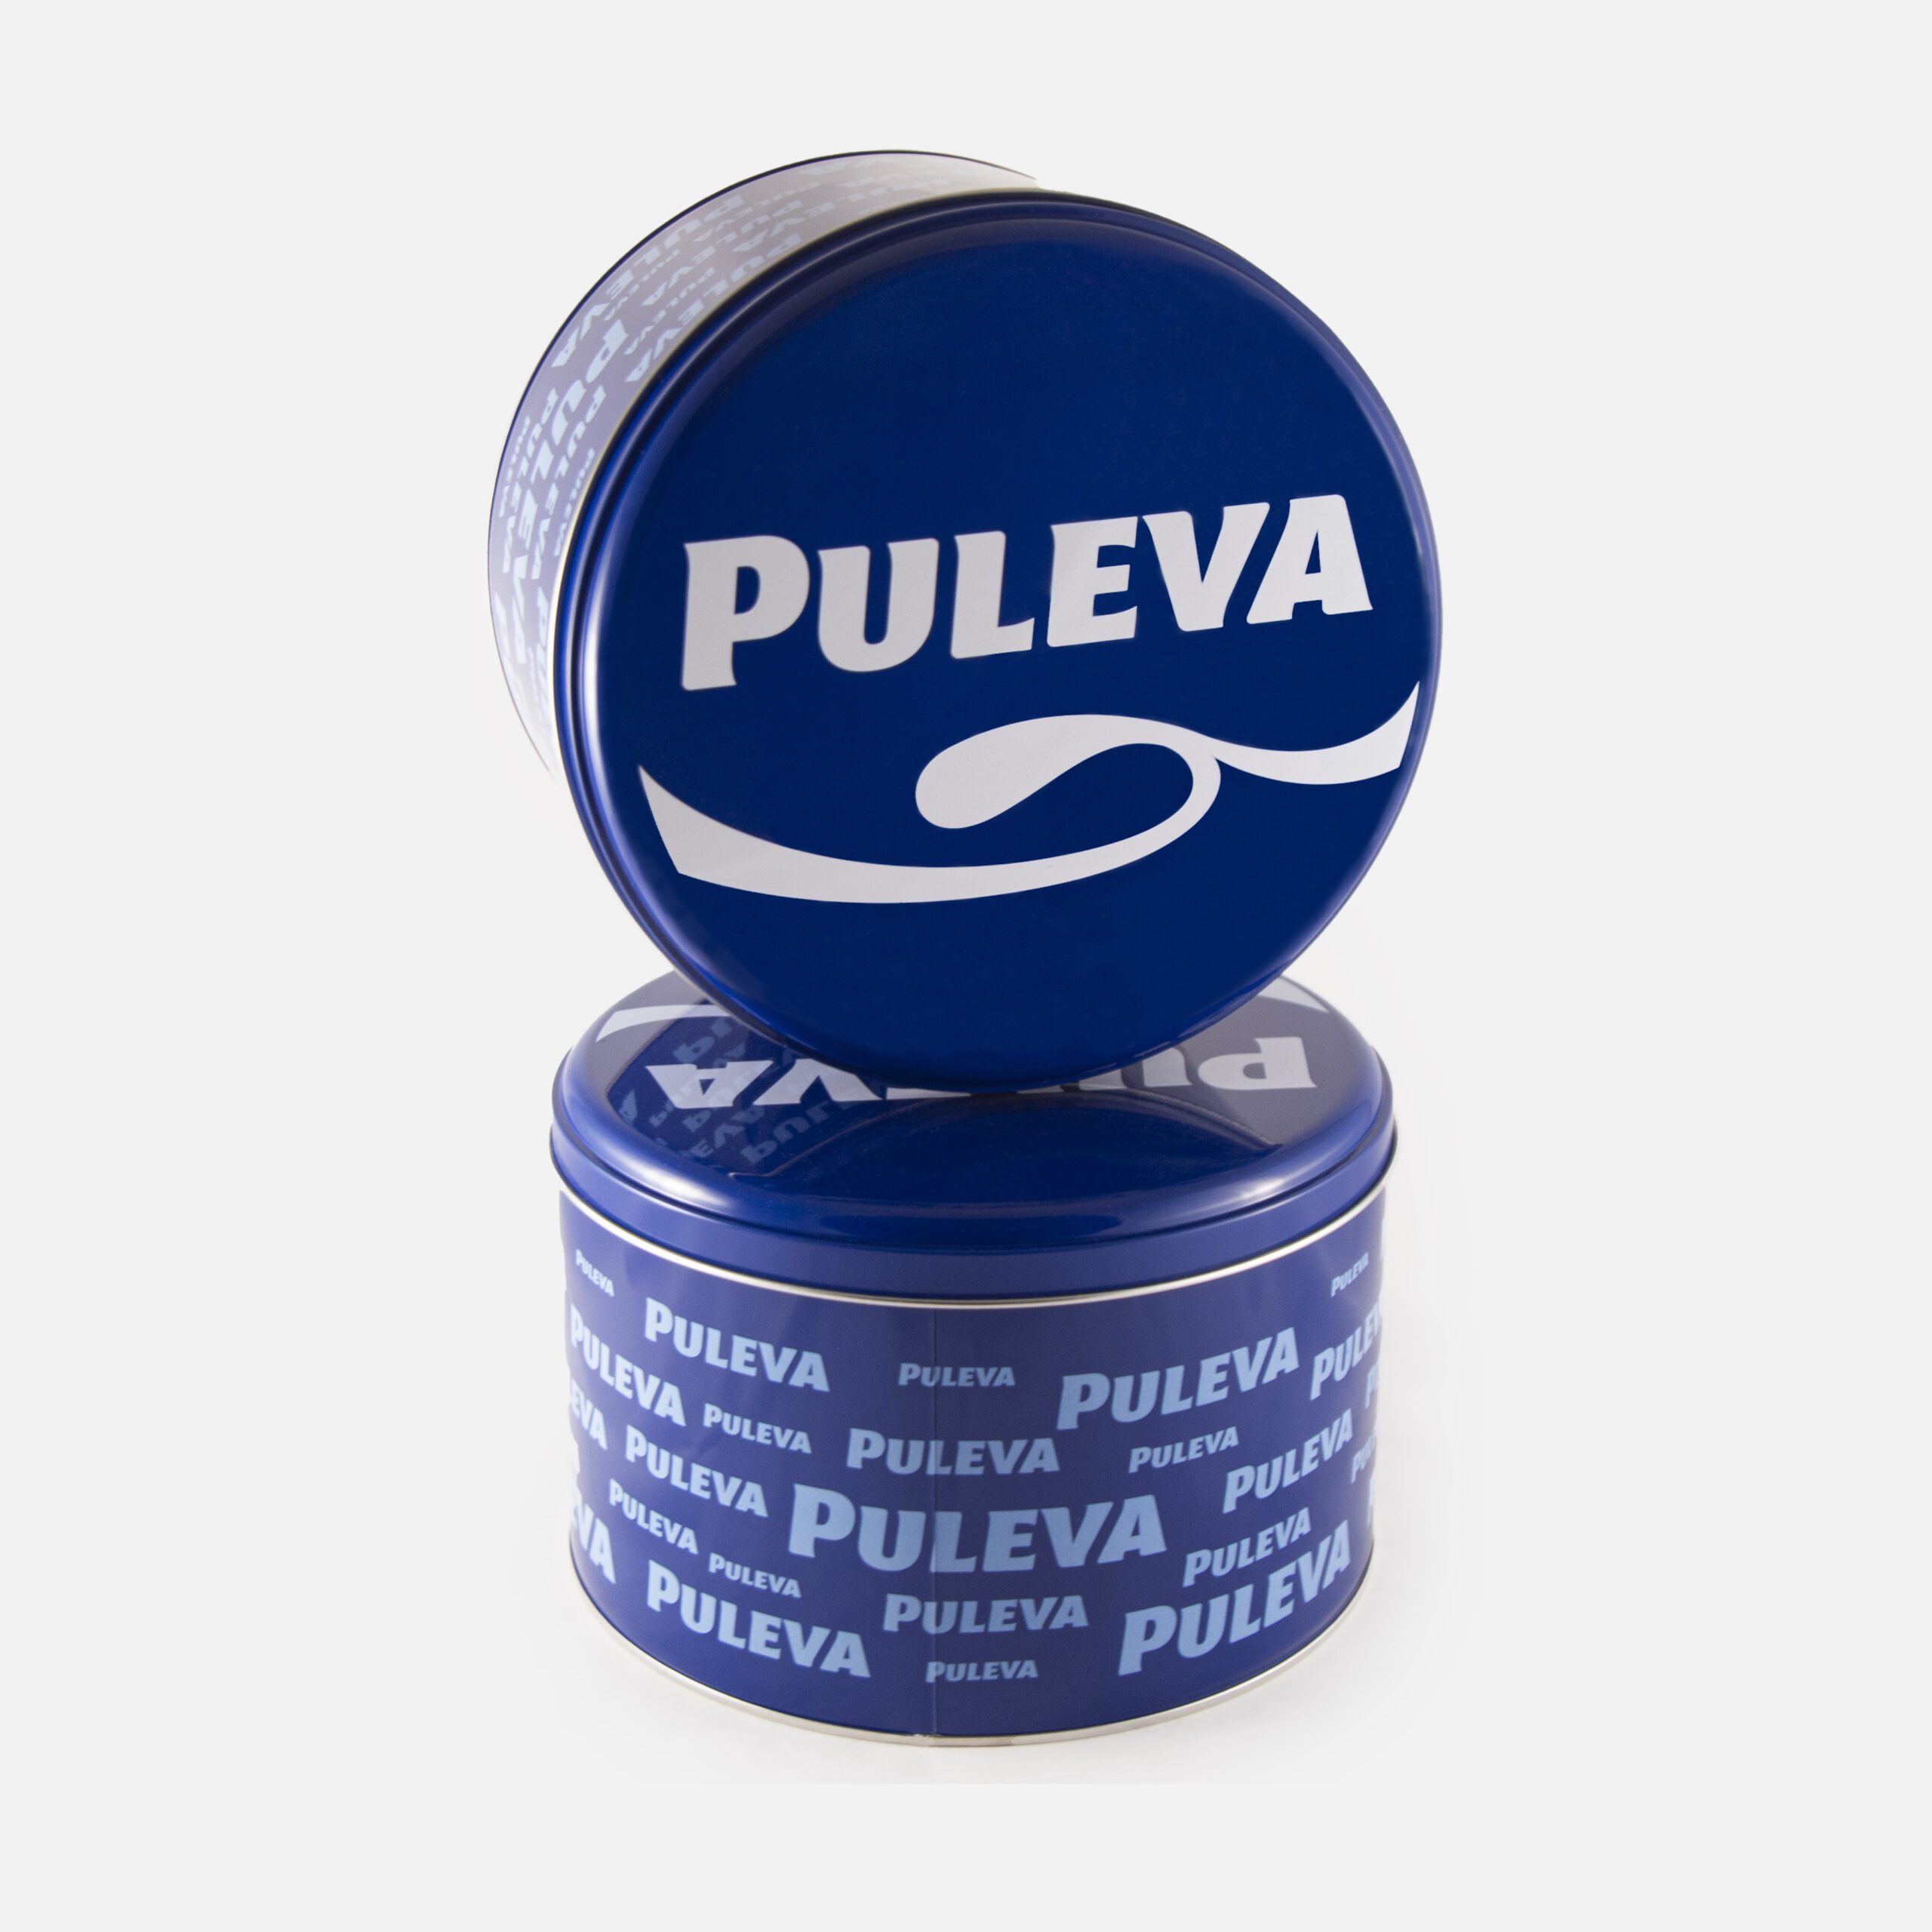 Envase metálico promocional para Puleva scaled - Portfolio